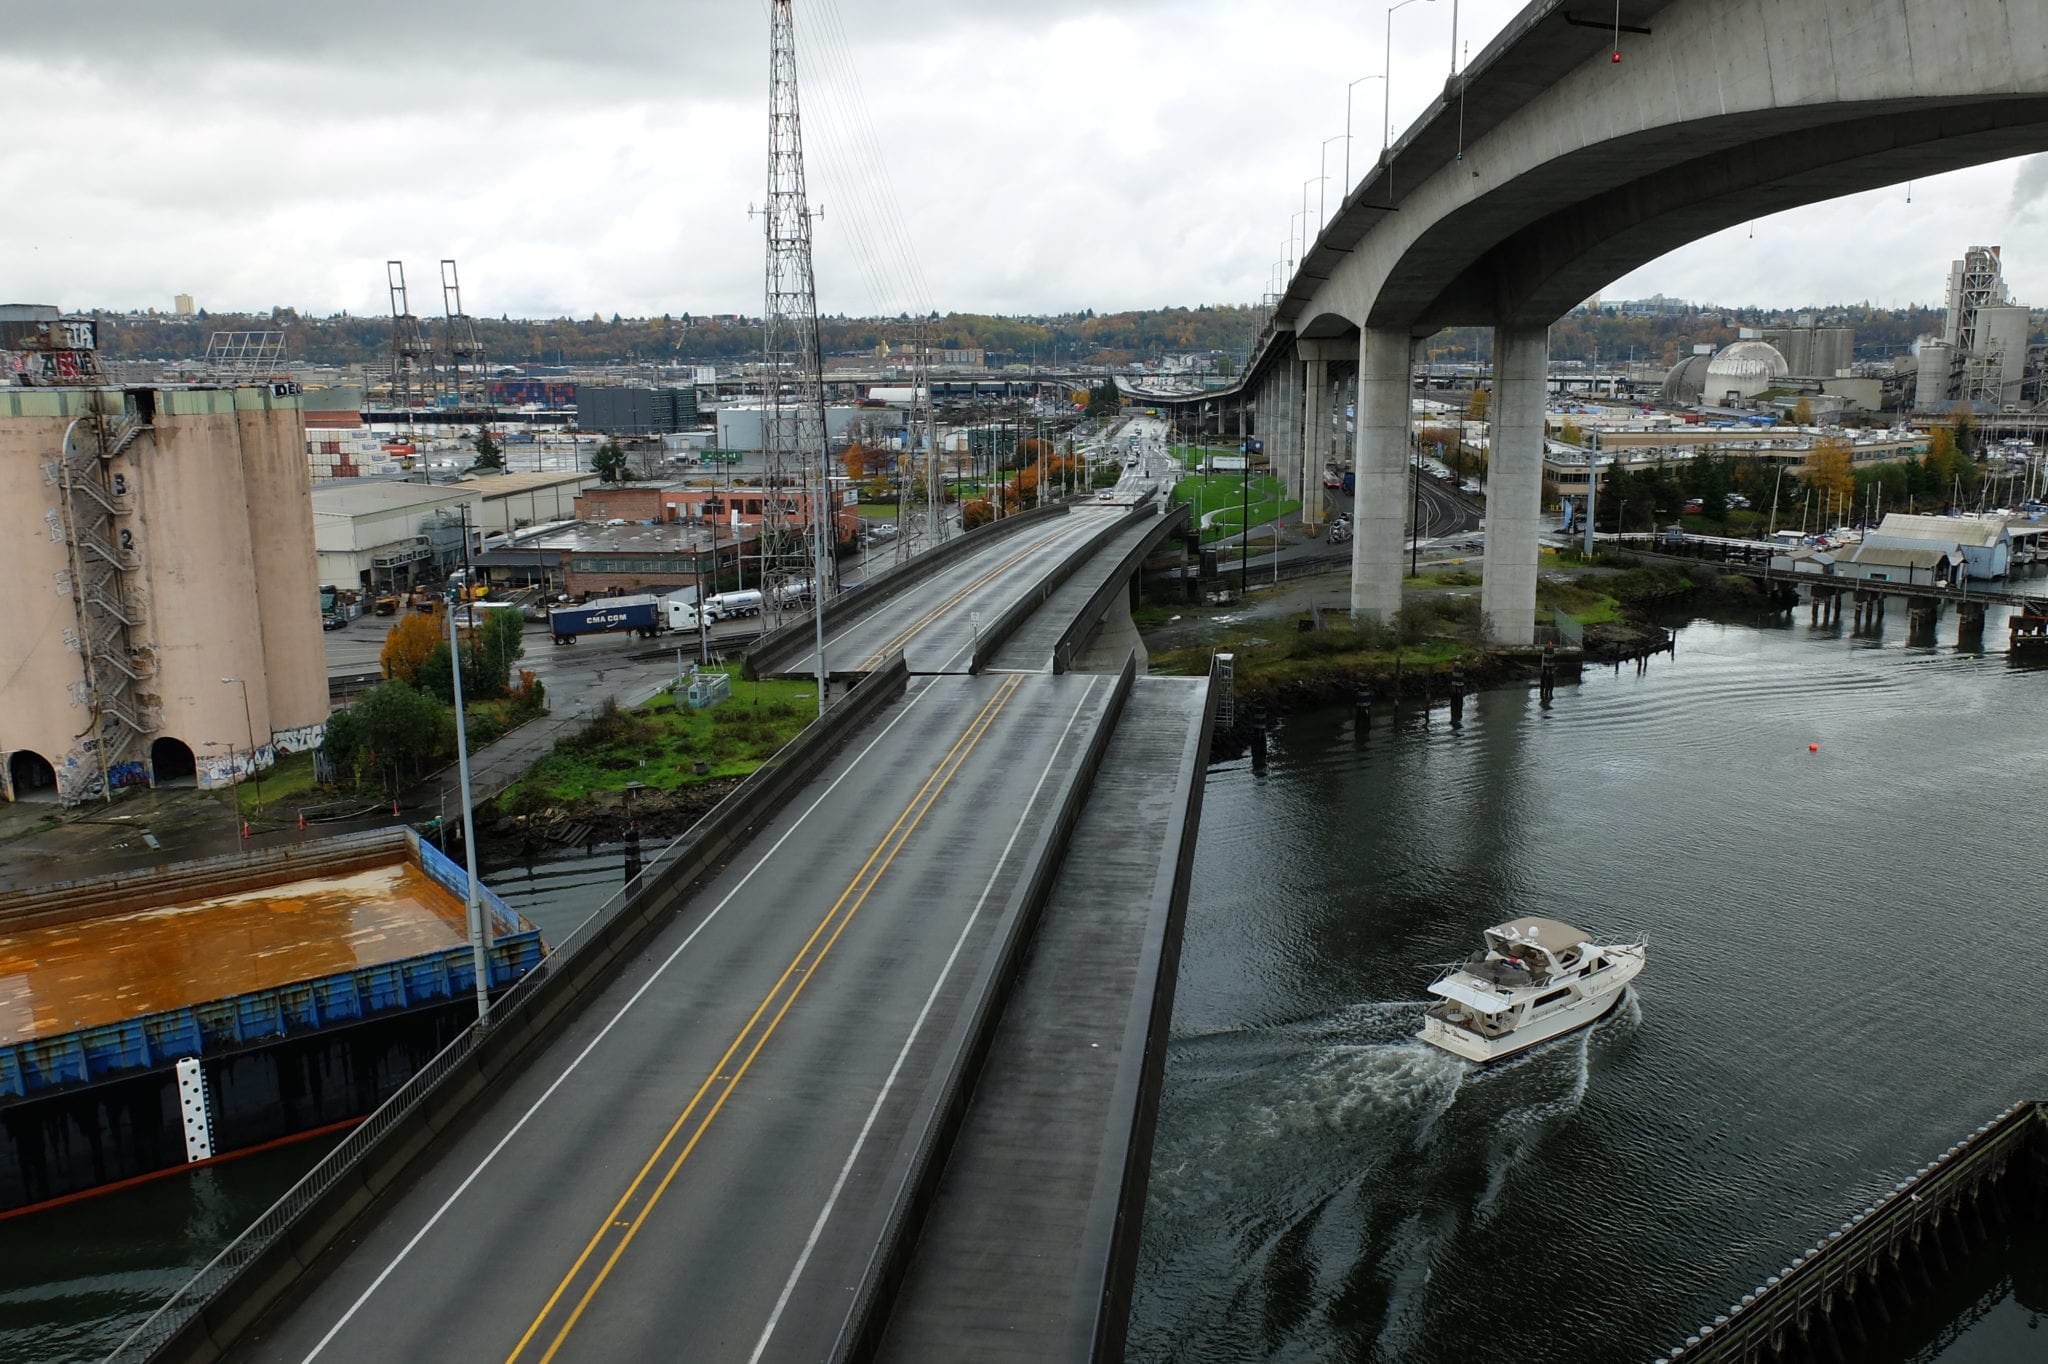 A photo of the West Seattle Bridge, both the main bridge and the low bridge.